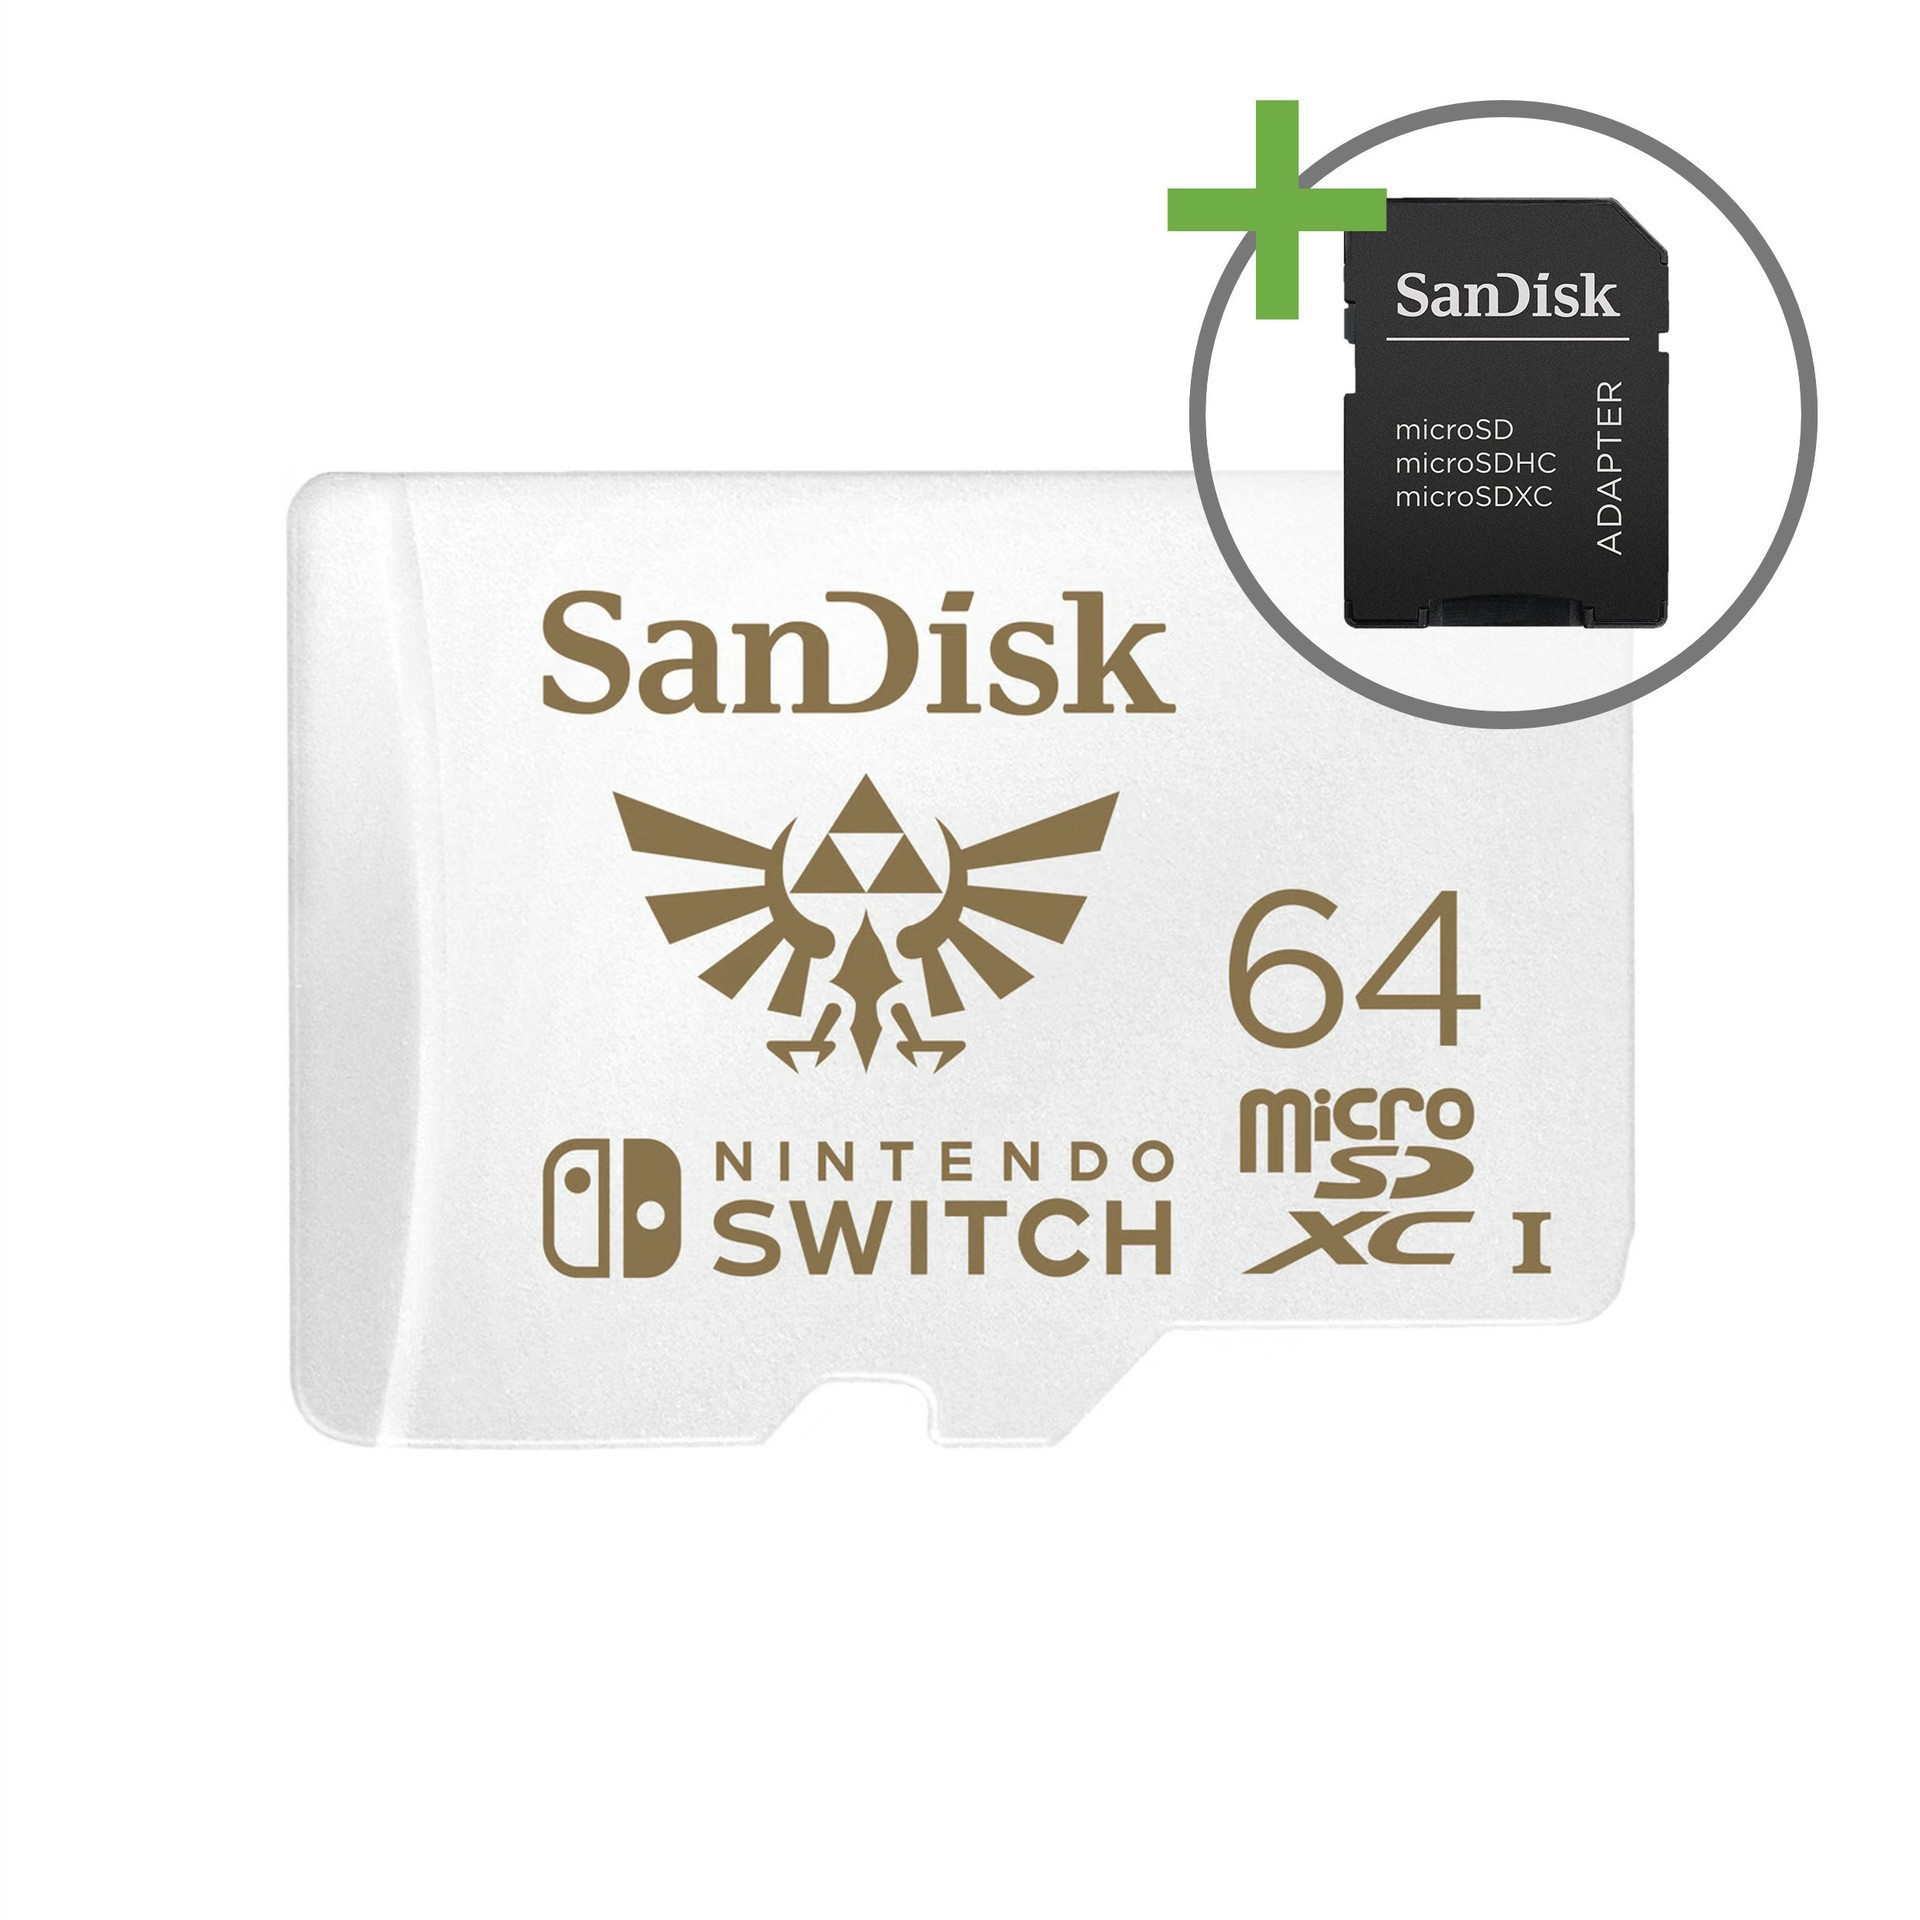 SanDisk MicroSDXC 64GB - Legend of Zelda + microSD Adapter - Nintendo Switch Hardware